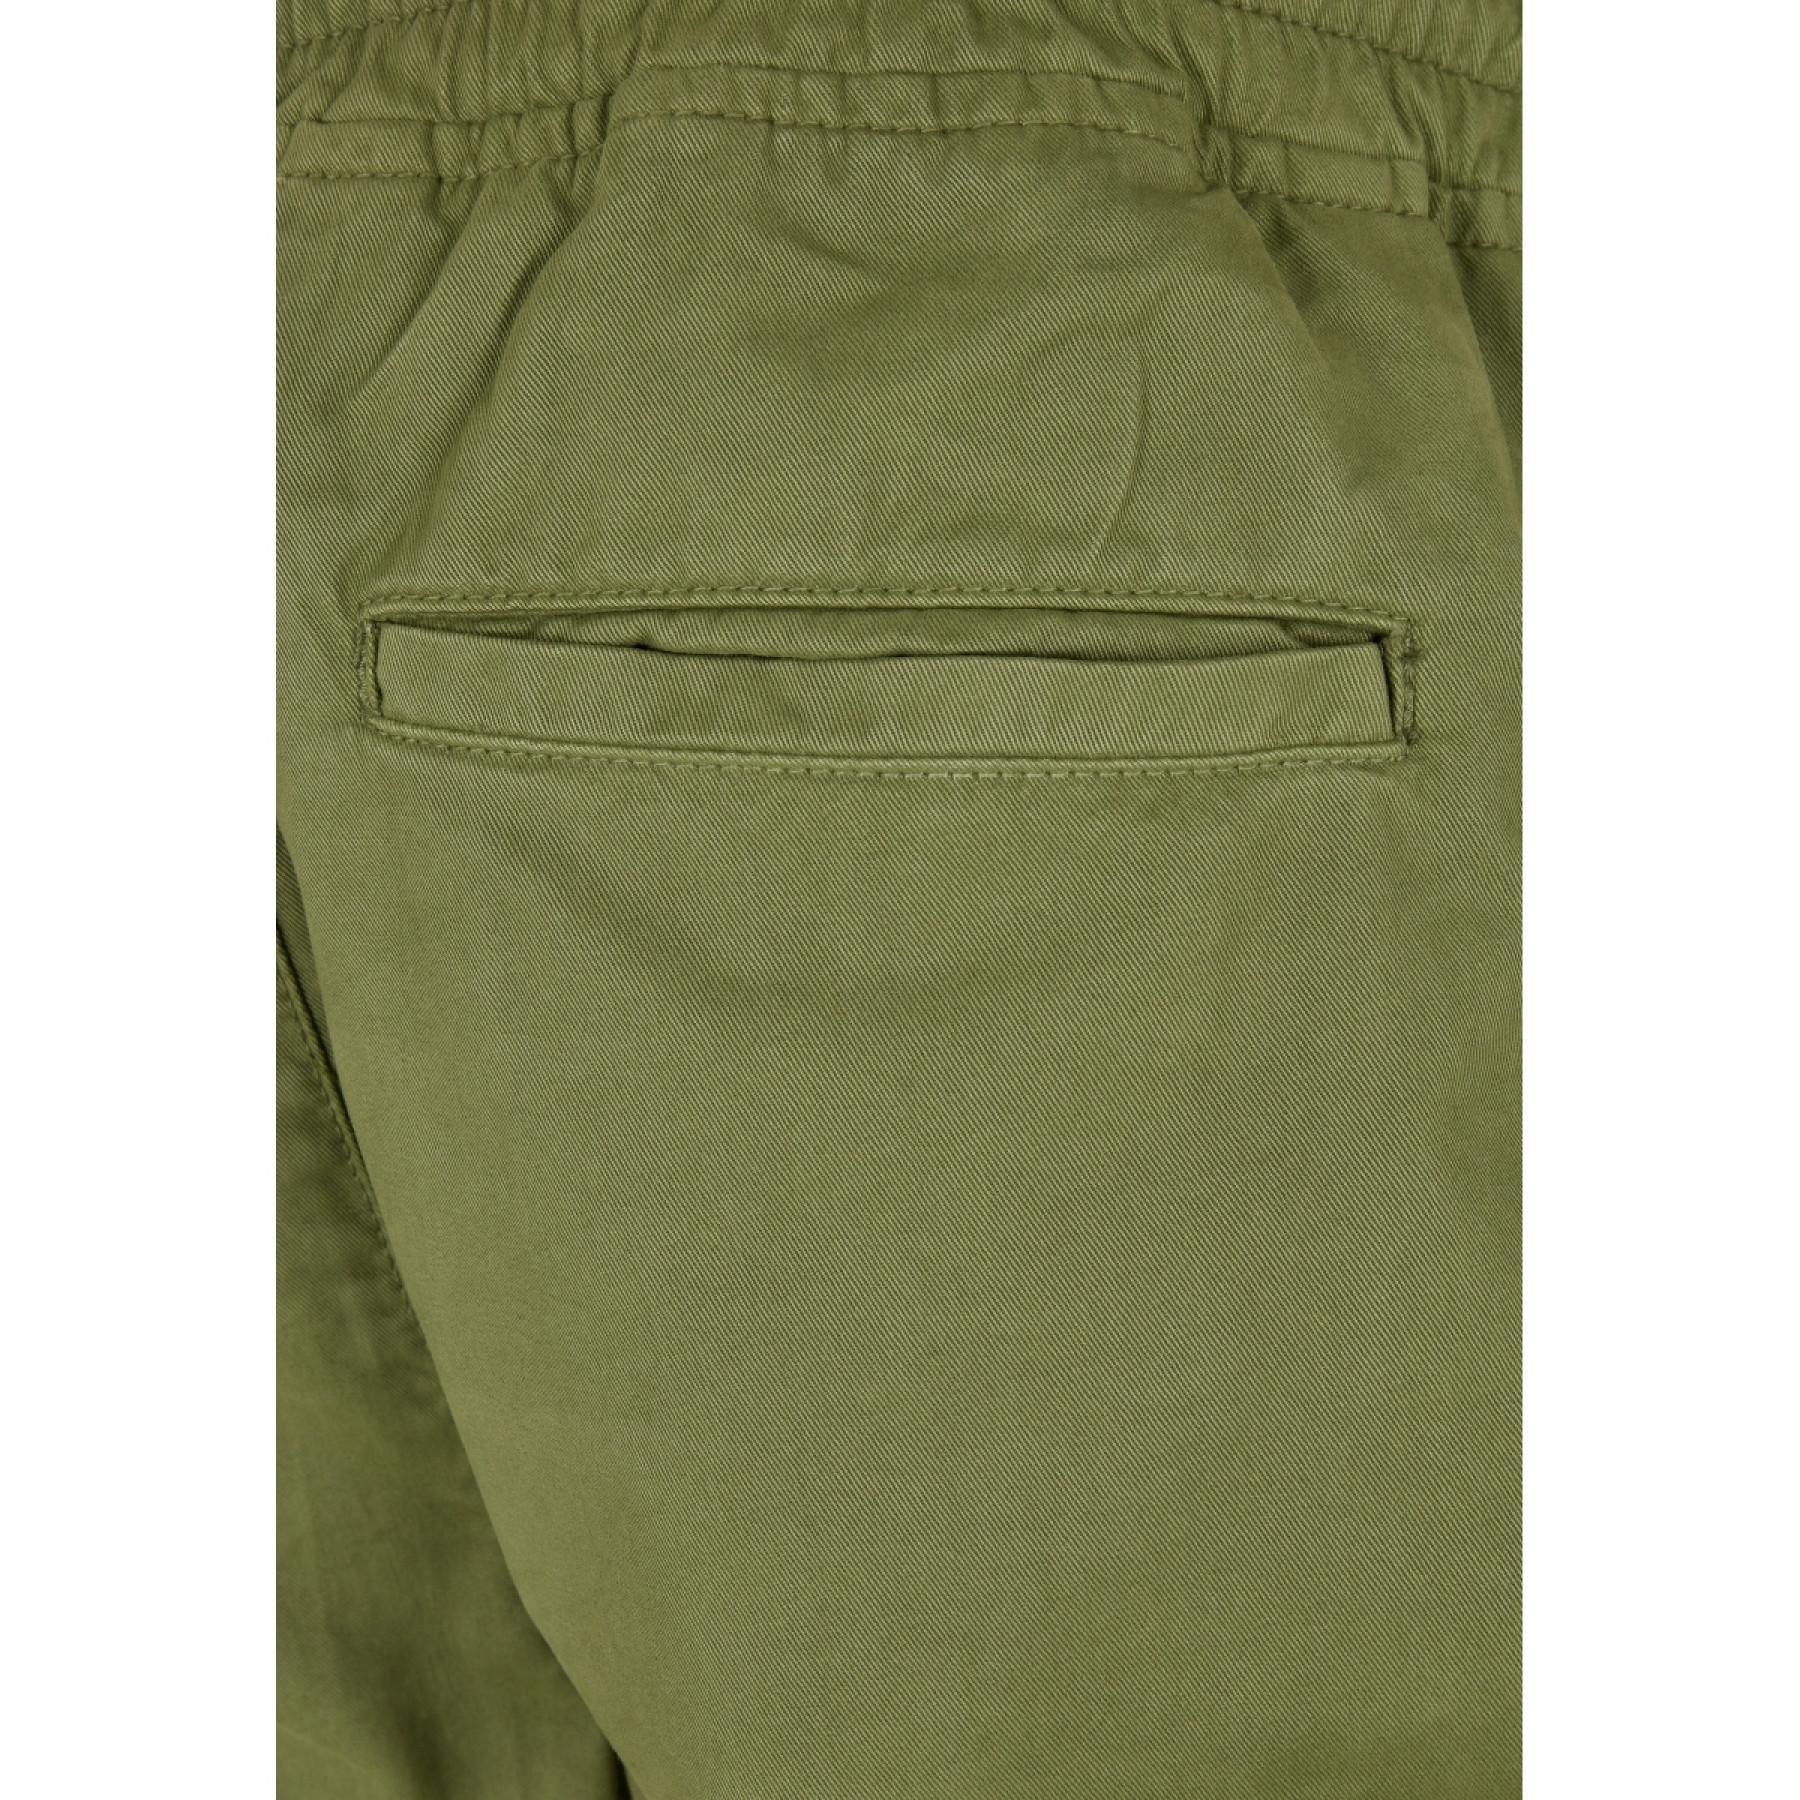 Pantalon Urban Classics military-grandes tailles